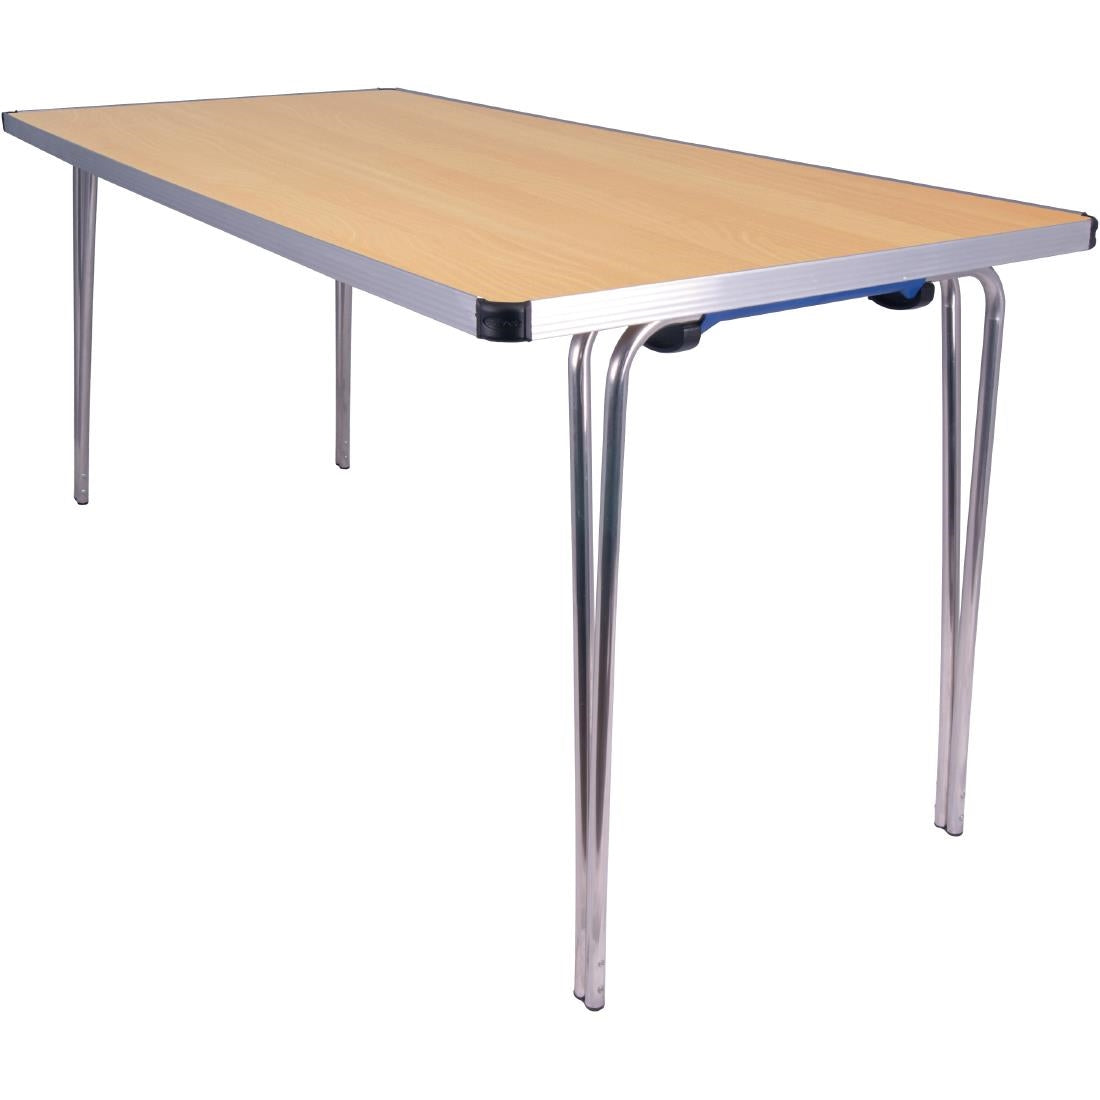 DM601 Gopak Contour Folding Table Beech 5ft JD Catering Equipment Solutions Ltd